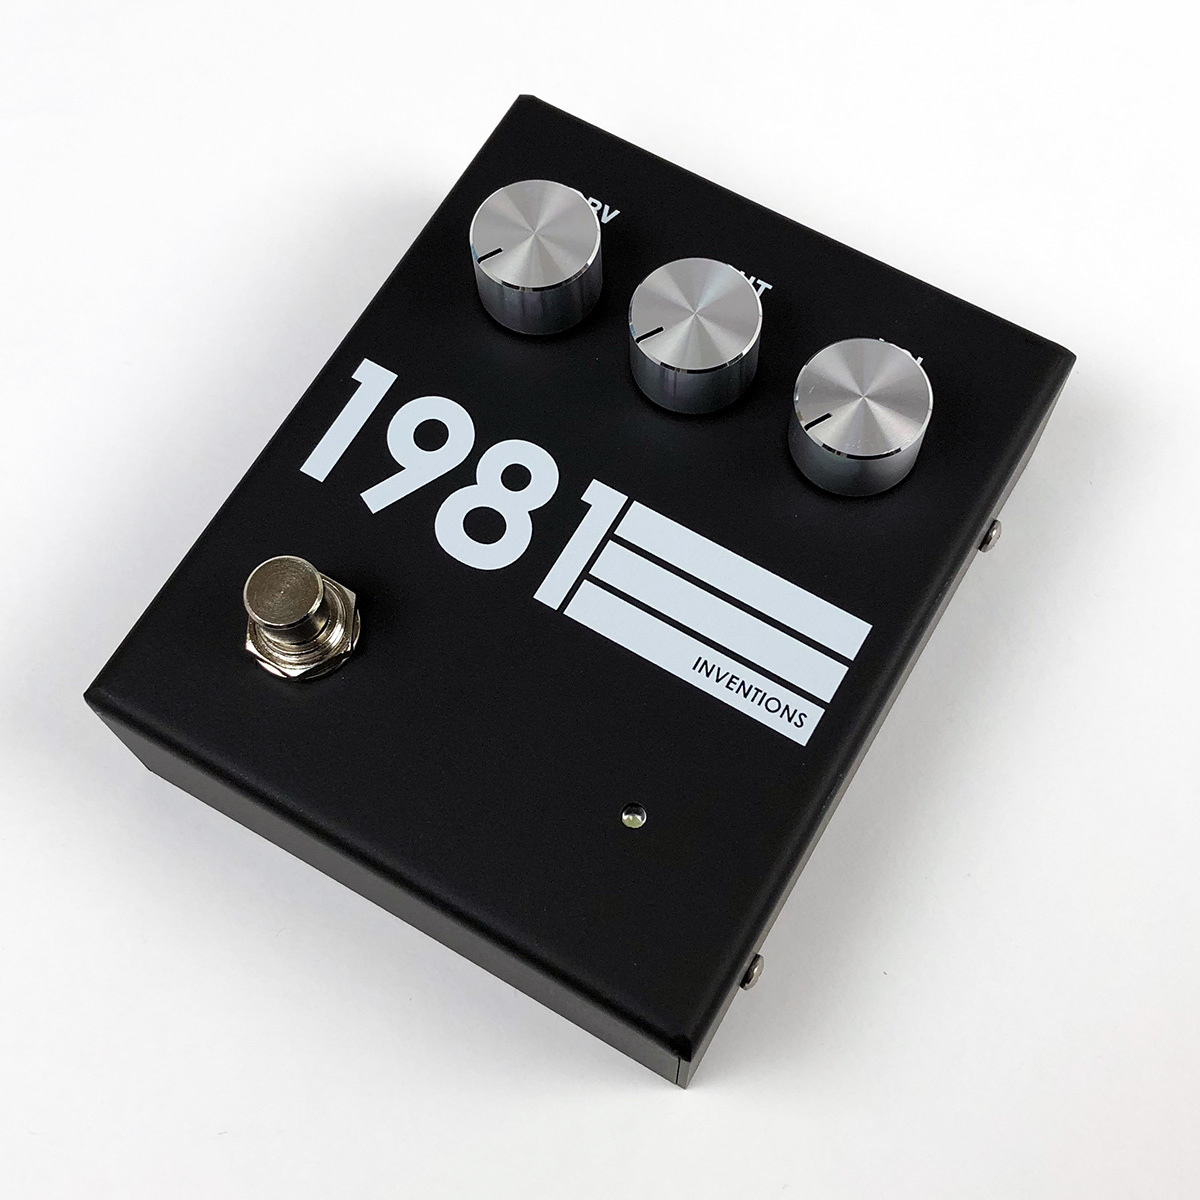 1981 Inventions DRV Black & White プリアンプ/ ディストーション ...